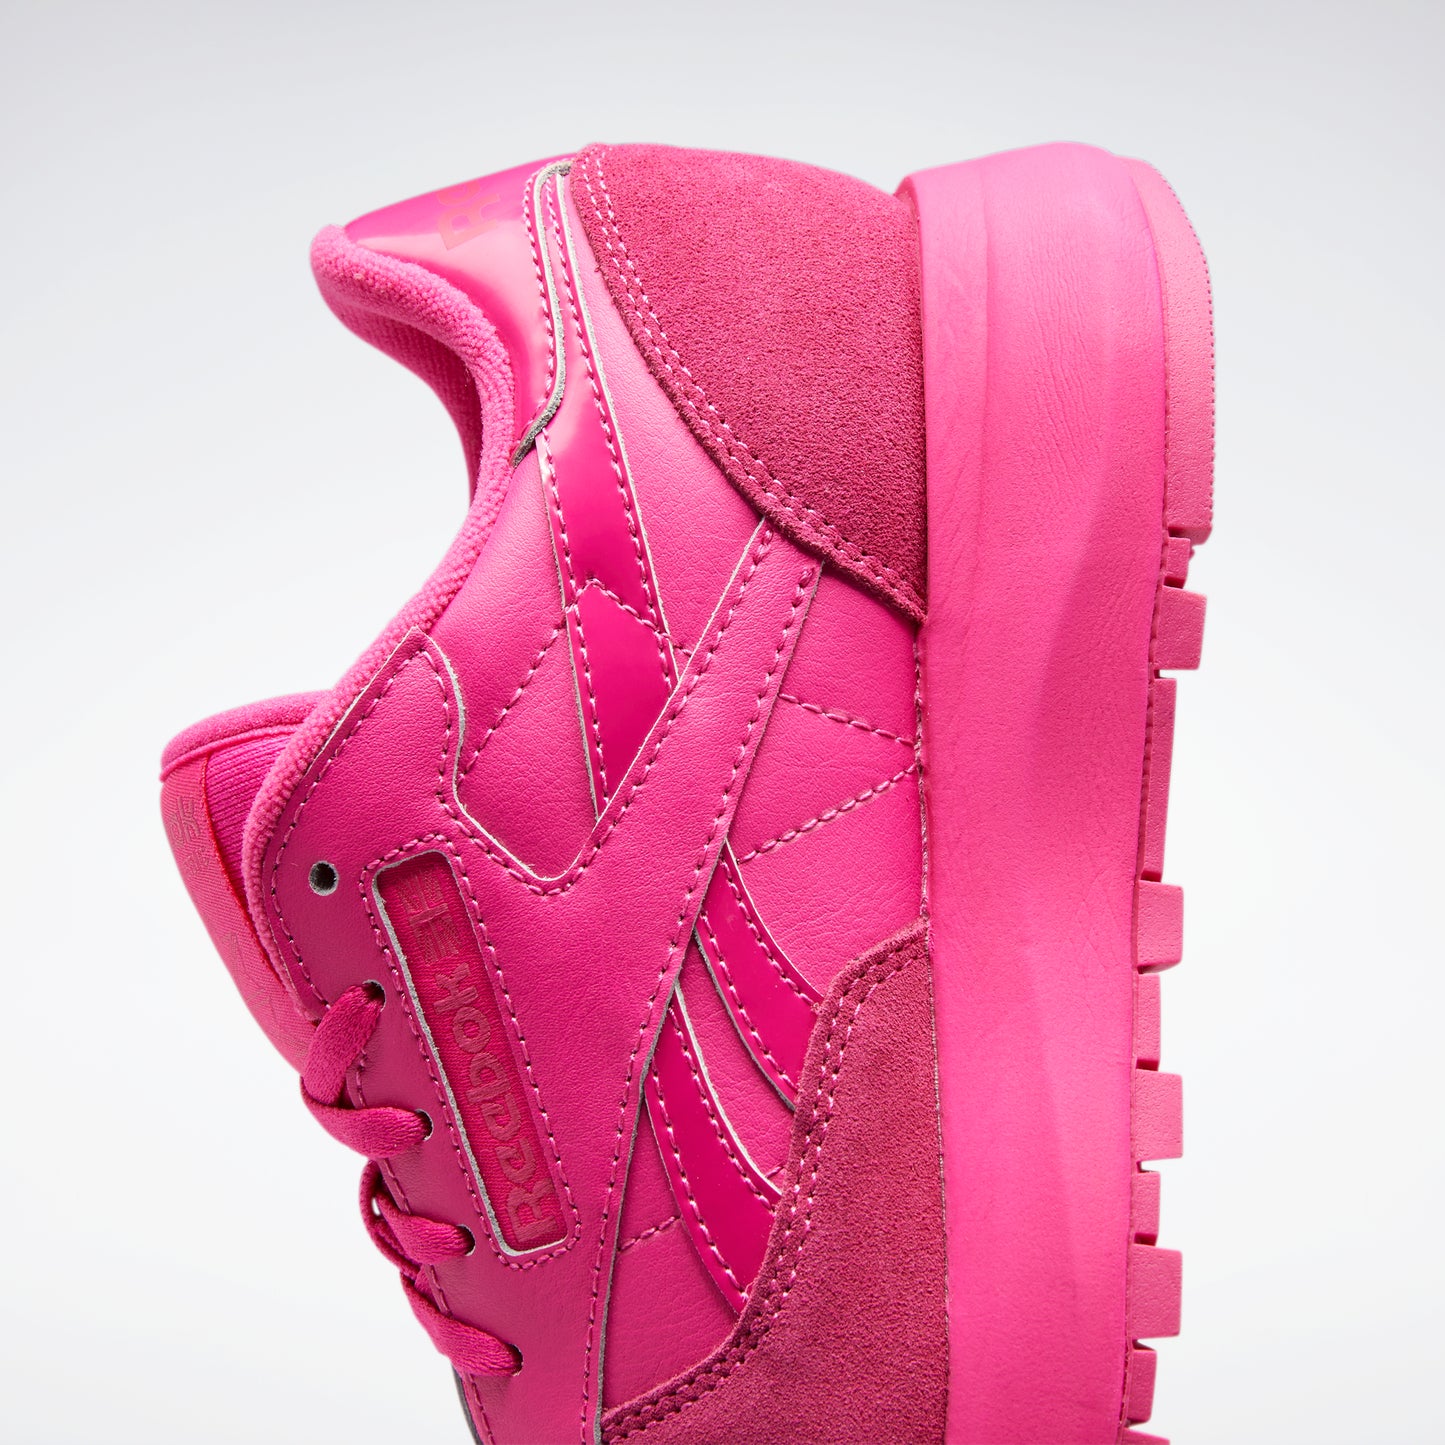 Reebok Footwear Women Classic Leather Sp Shoes Propnk/Propnk/Seprpi